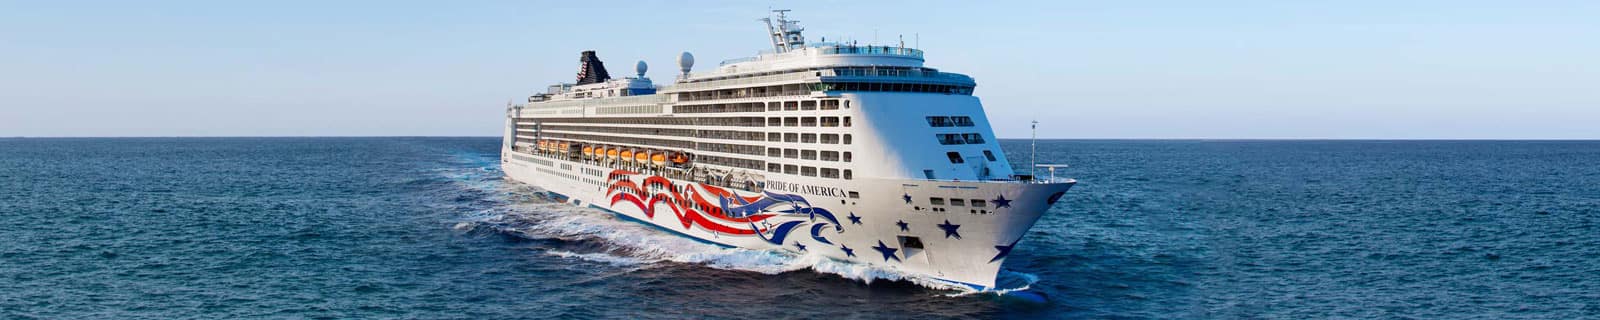 cruise ships america